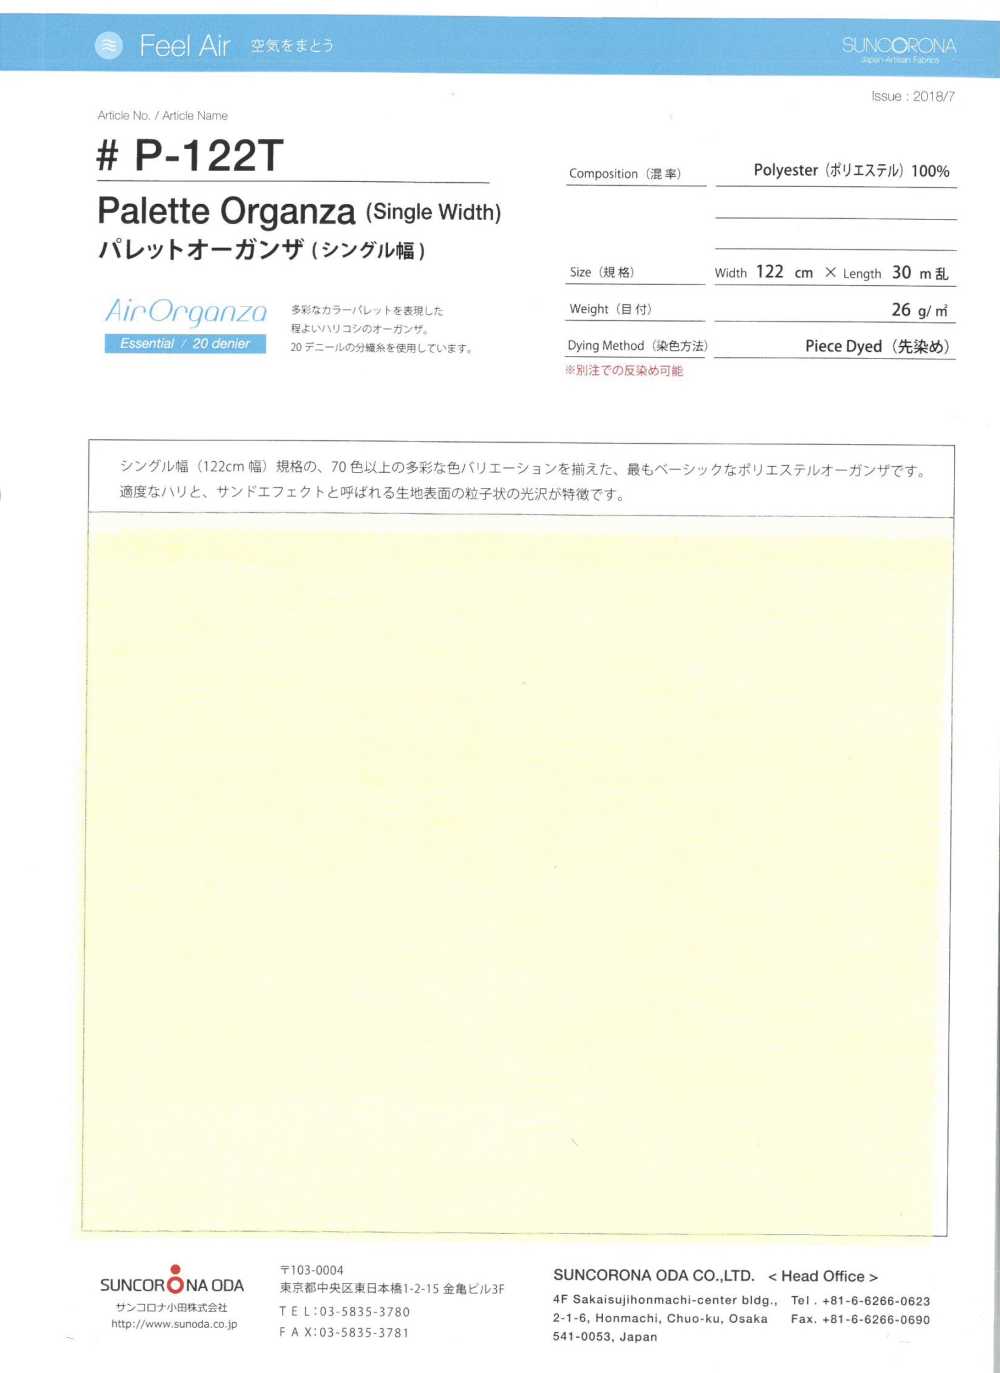 P-122T Pallet Organza (Single Width)[Textile / Fabric] Suncorona Oda